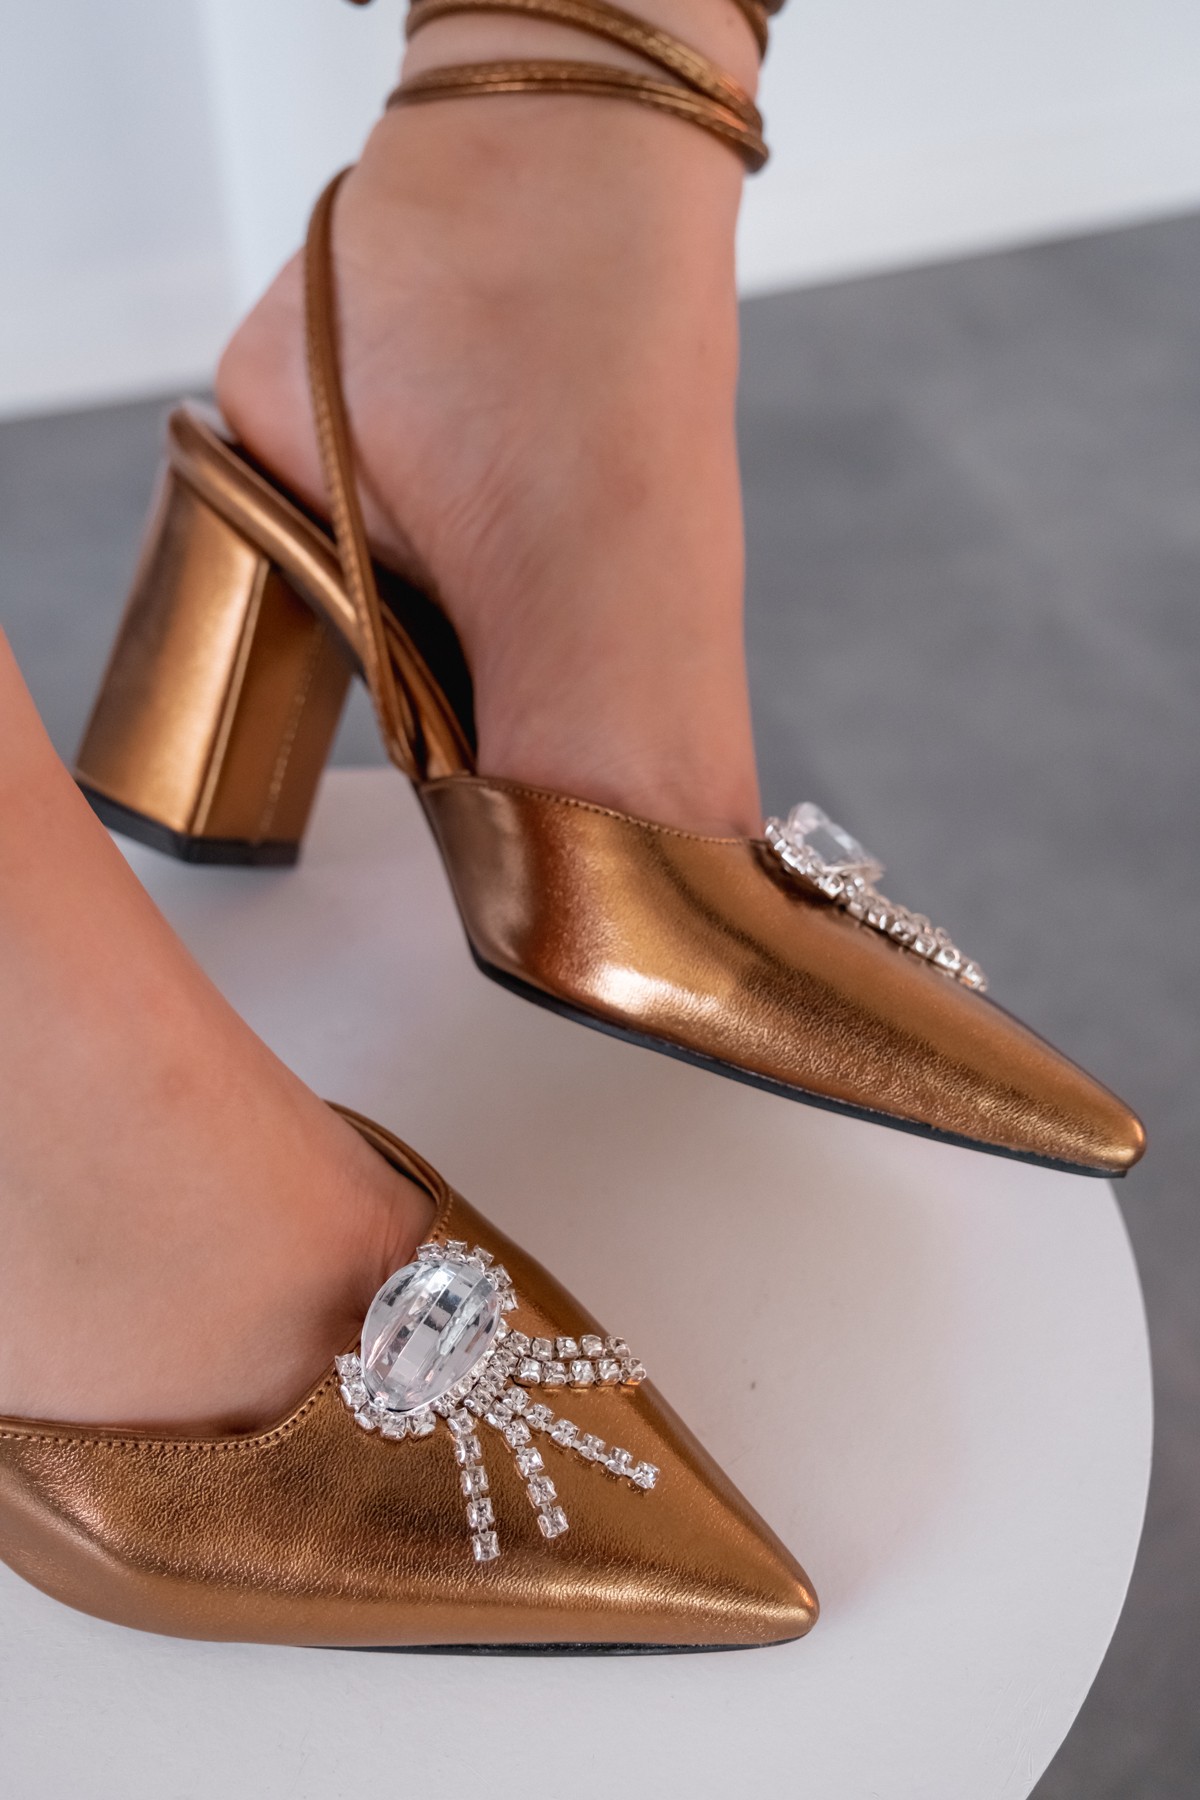 Teldina bright satin leather high heeled stiletto bronze